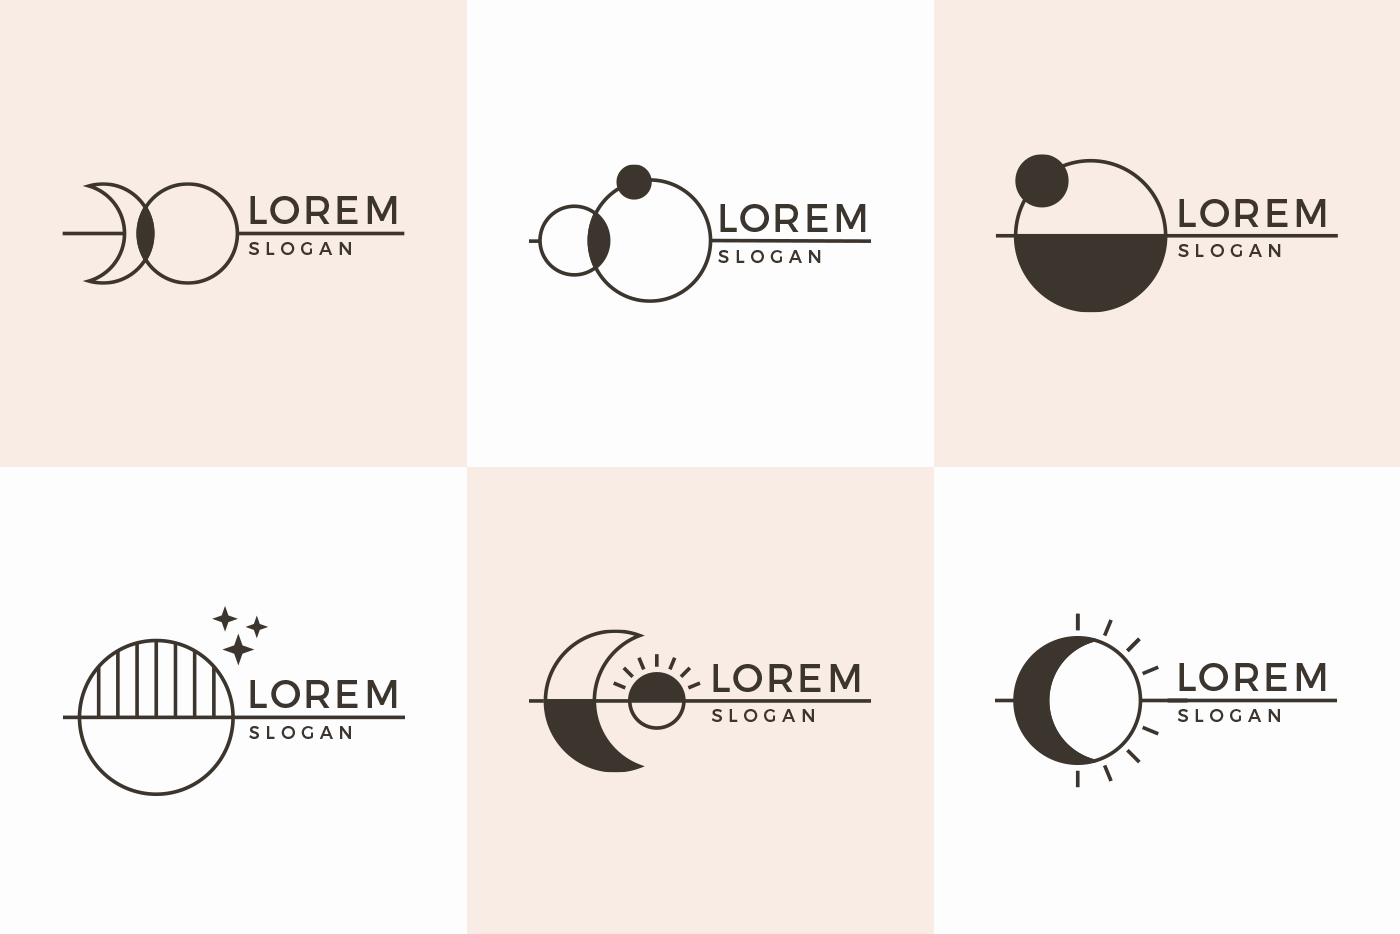 Modern & Minimalist Logo Templates - Pixfiniti